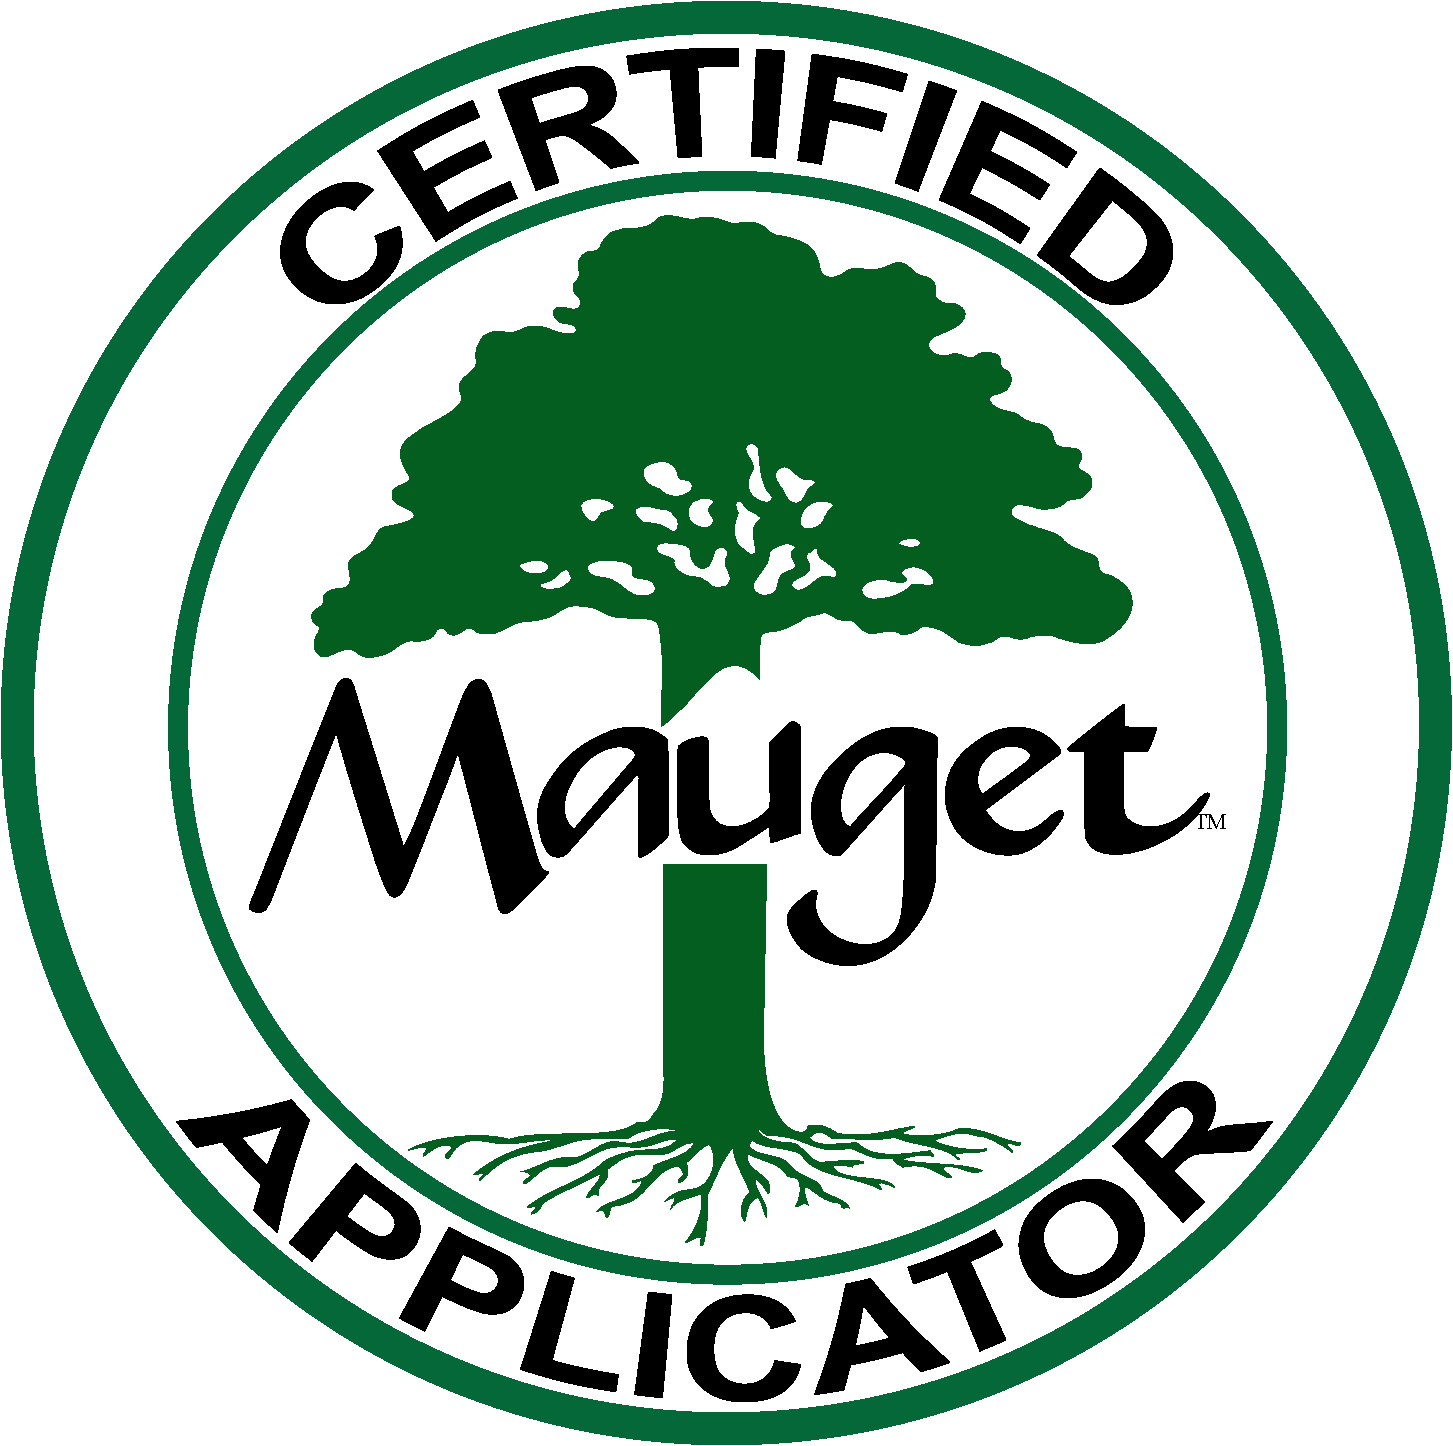 Certified Mauget Applicator